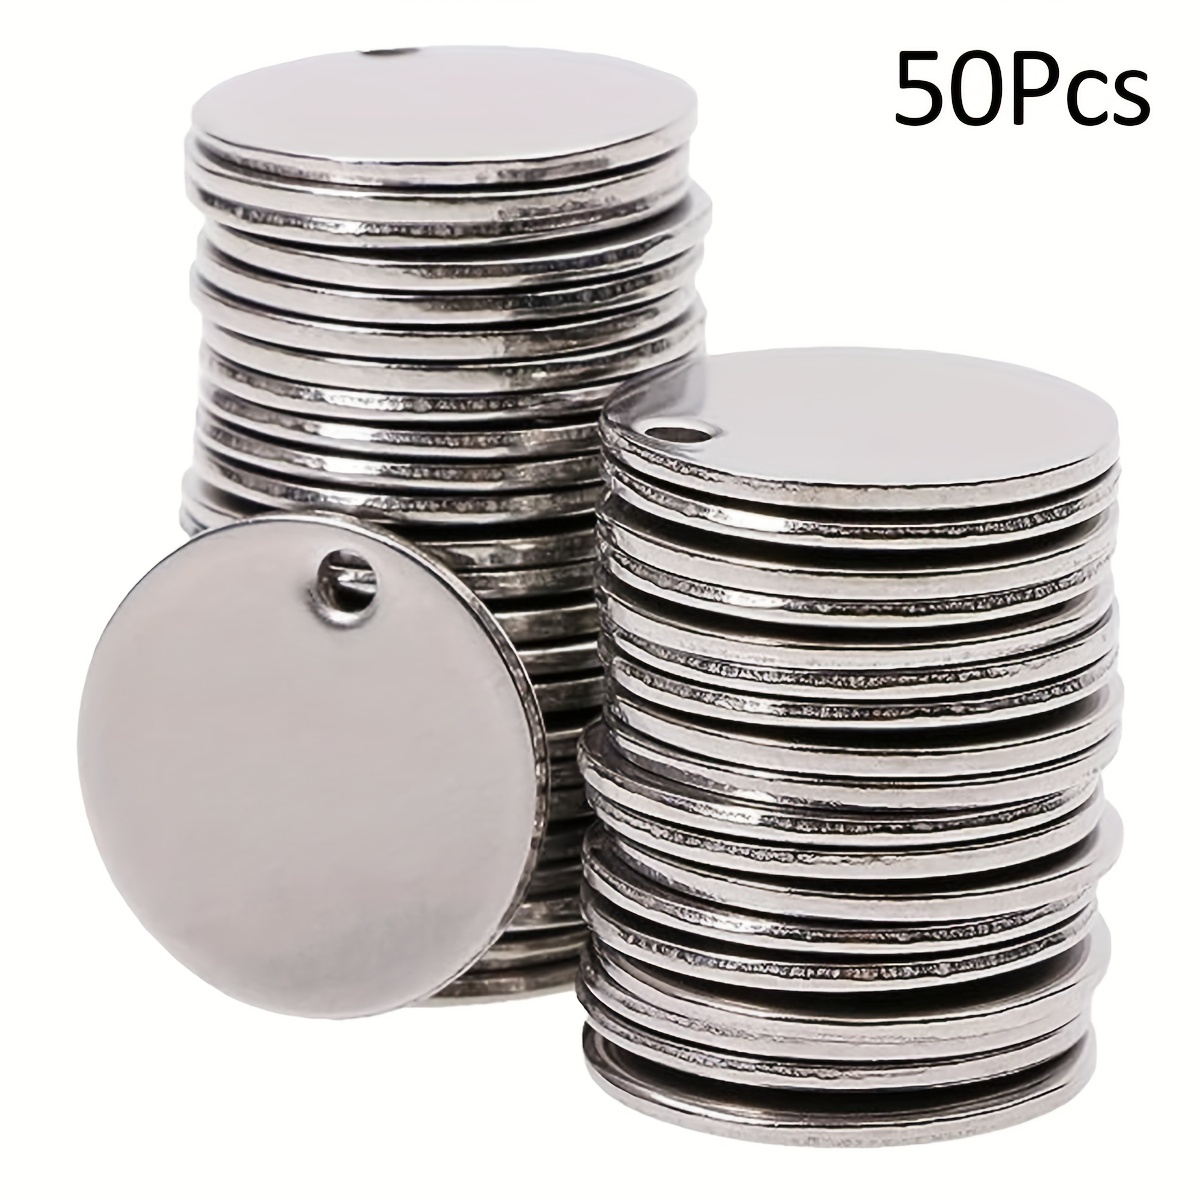 50pcs Aluminum Metal Stamping Blanks for Jewelry Pendant